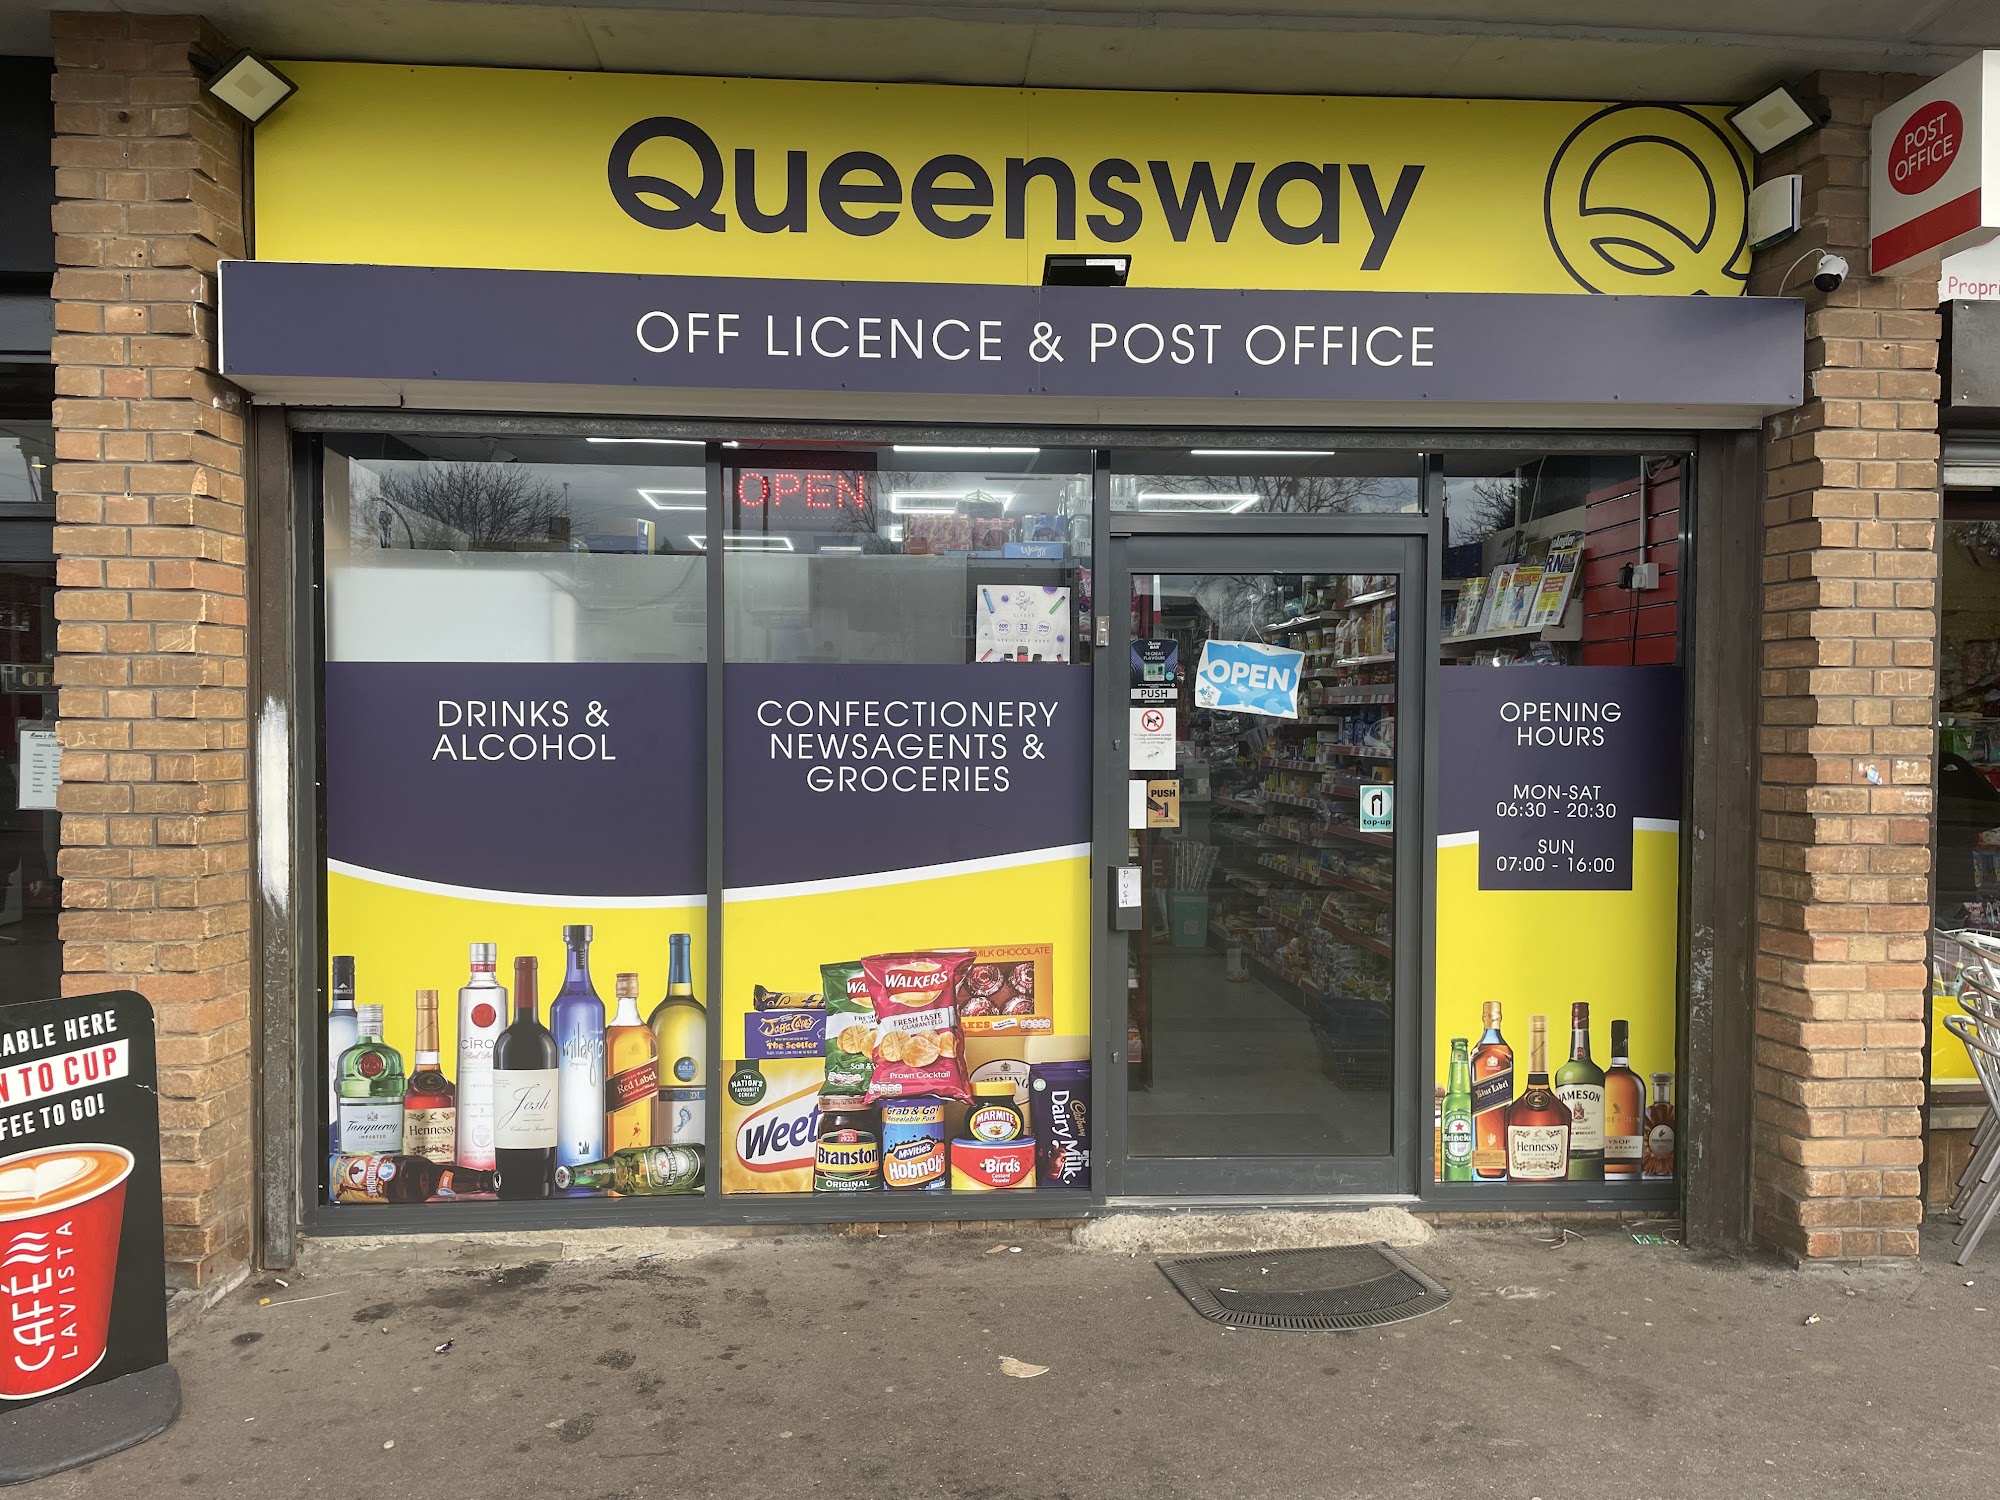 Queensway offlicense and postoffice